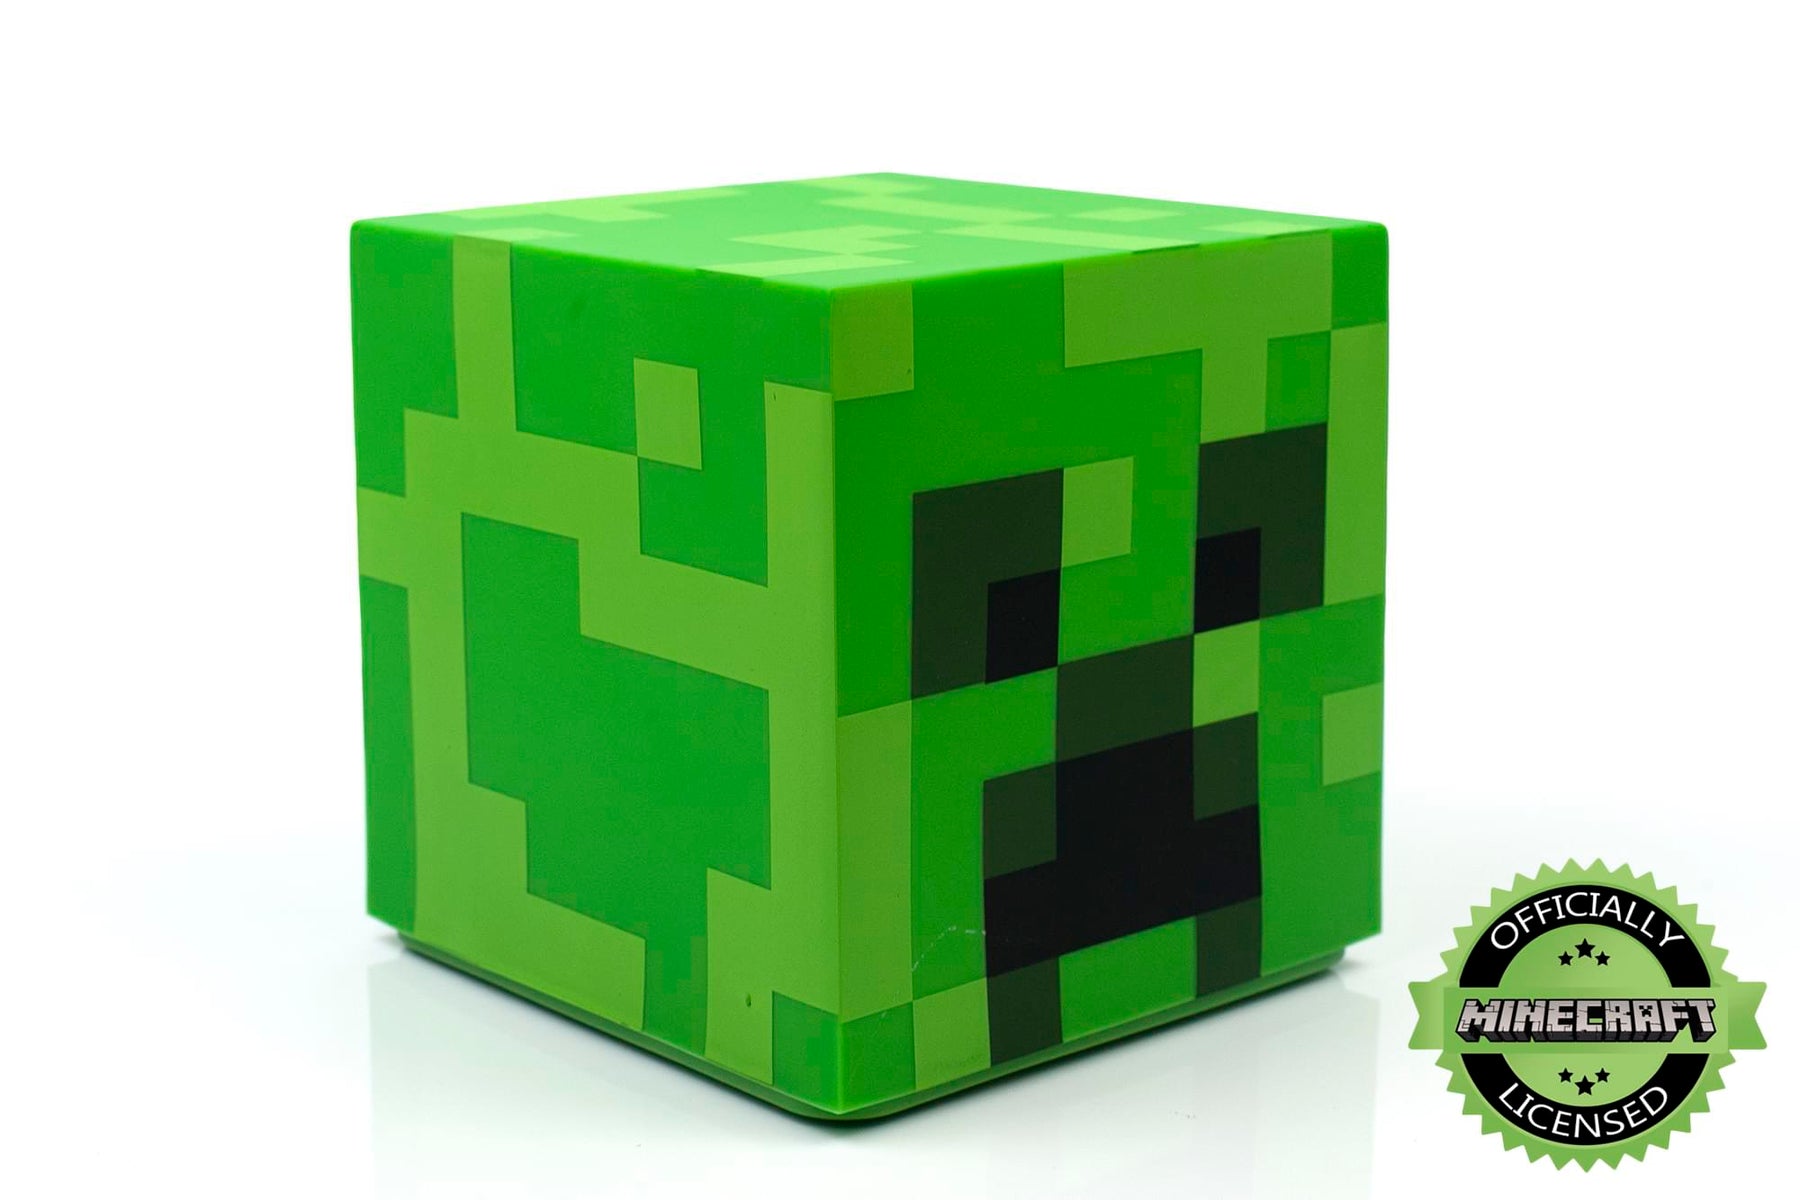 Minecraft Creeper LED Mood Light | Creeper Minecraft Mood Lighting | 5 Inches